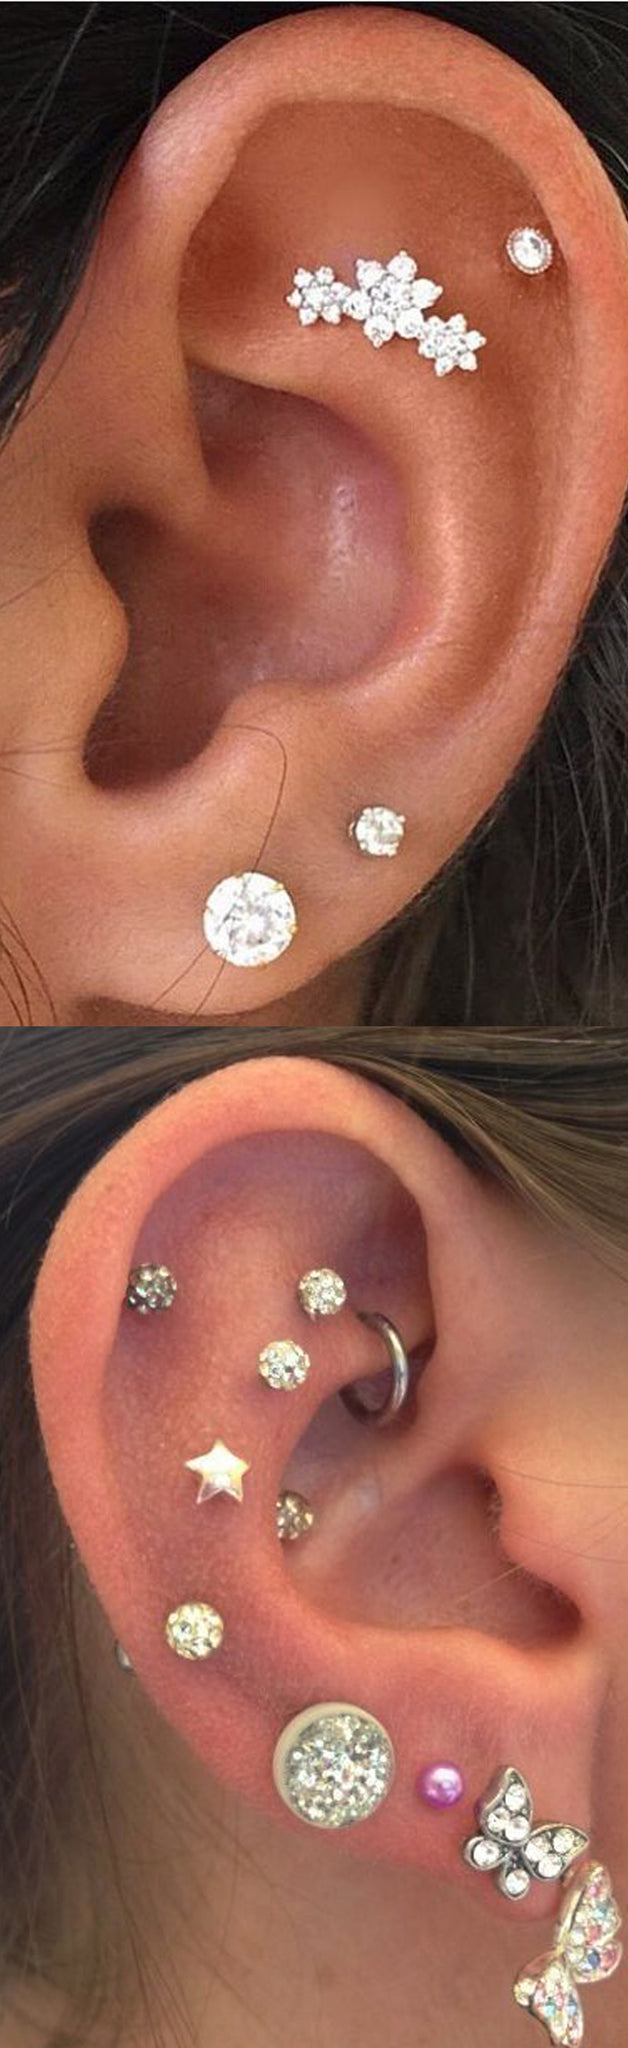 Full Multiple Ear Piercing Ideas Combinations at MyBodiArt.com - Crystal Triple Flower Cartilage Stud - Helix Earrings  